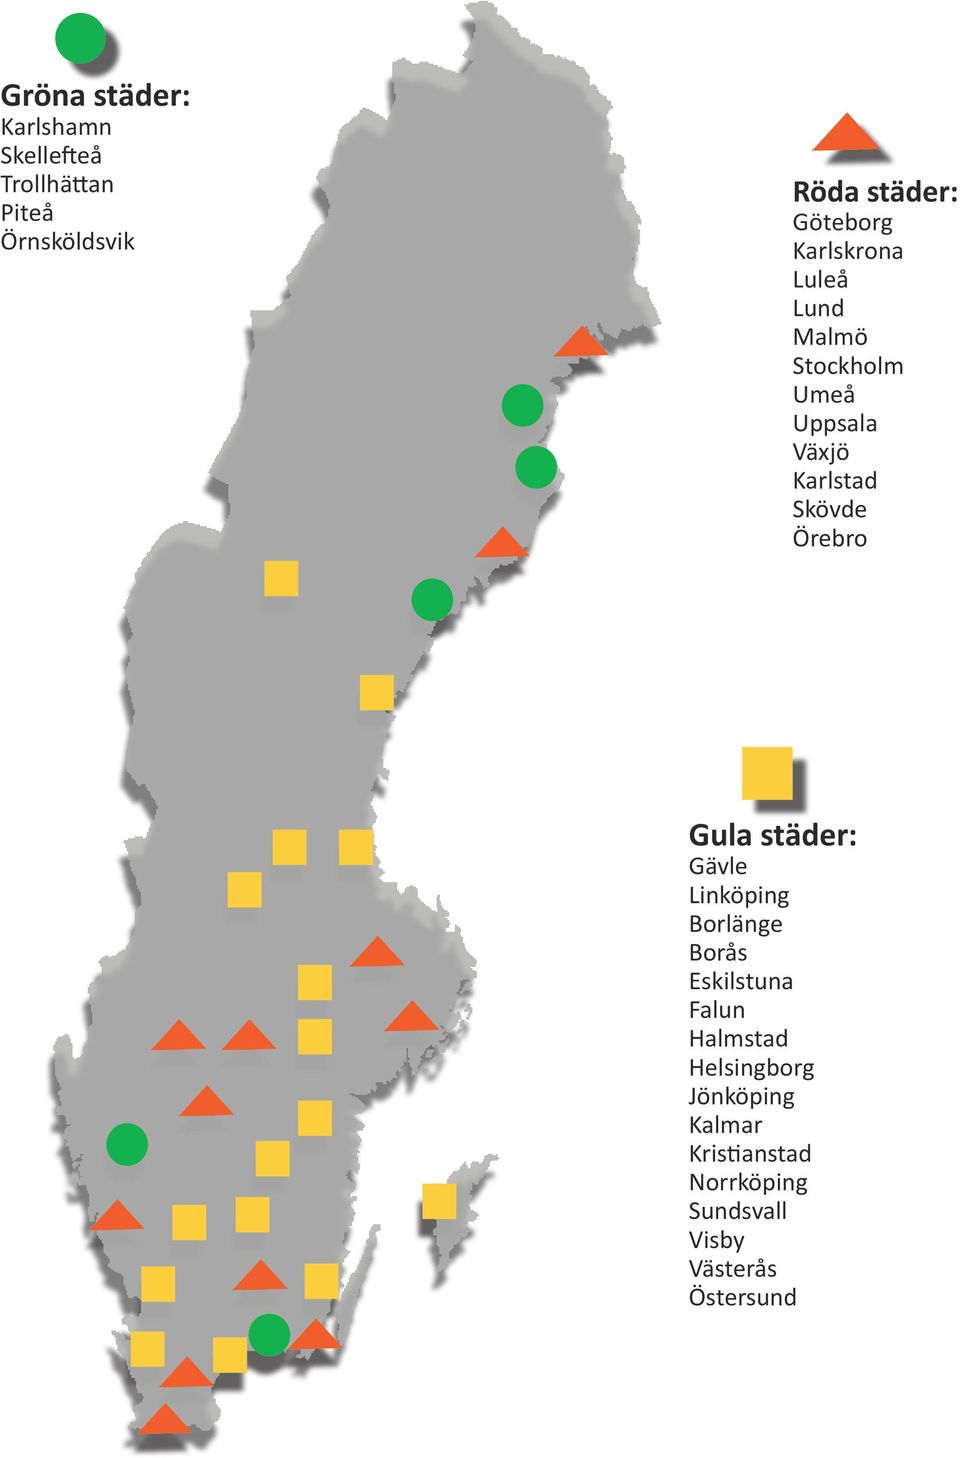 Örebro Gula städer: Gävle Linköping Borlänge Borås Eskilstuna Falun Halmstad